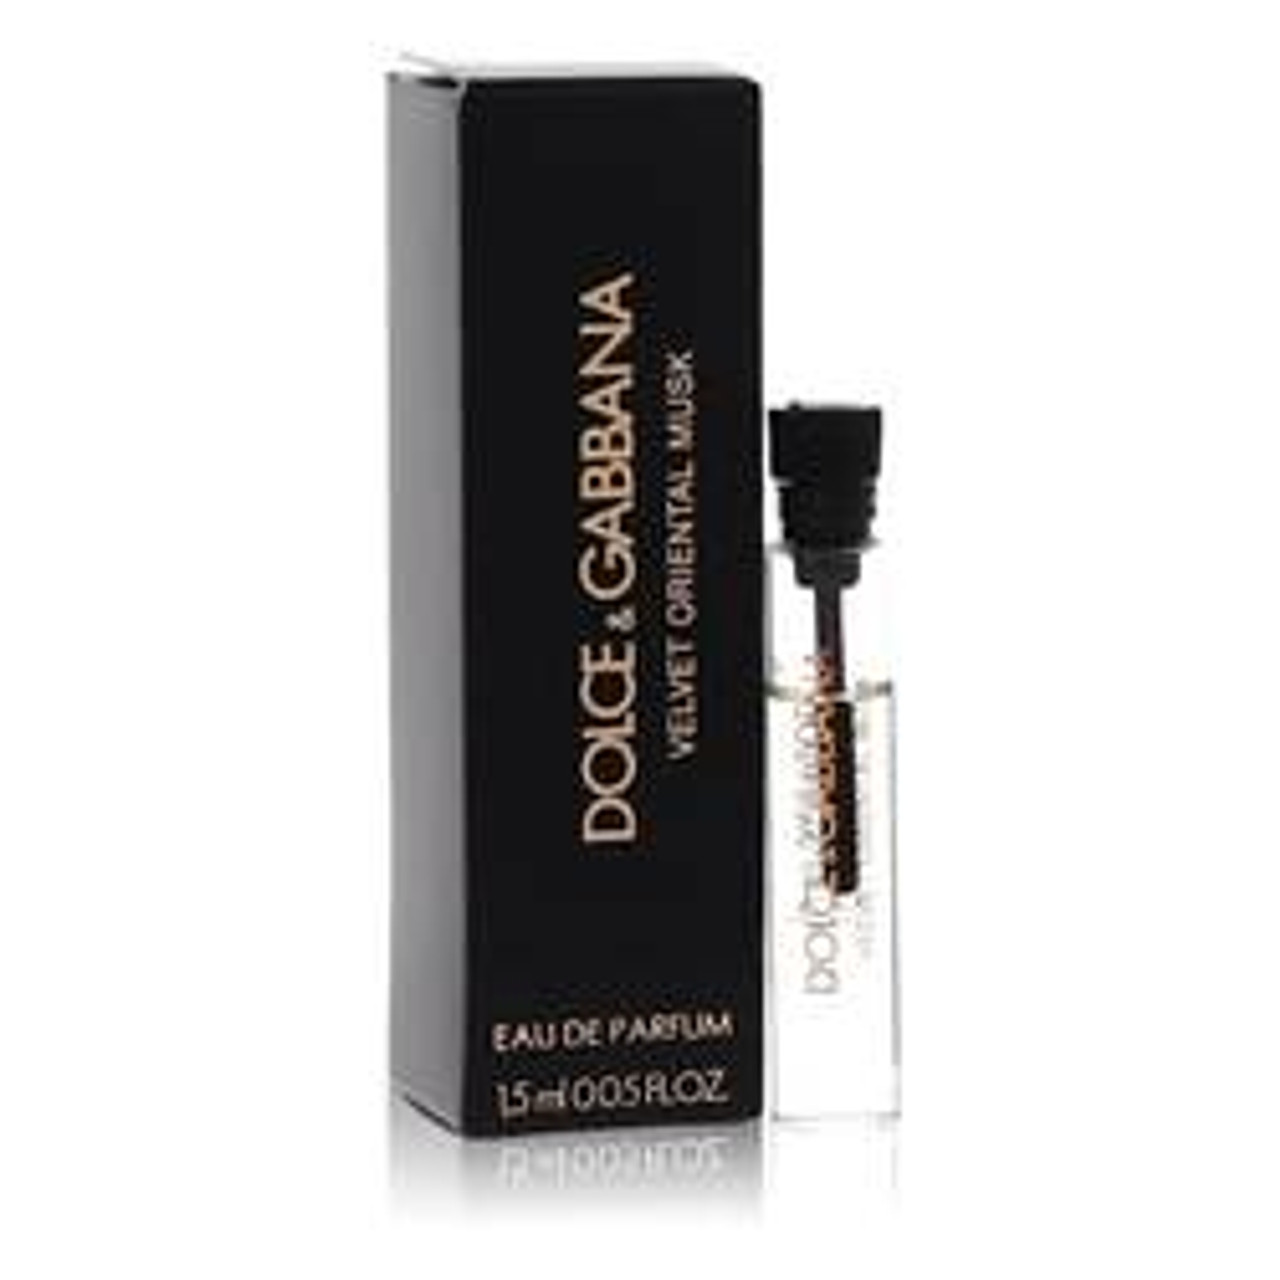 Dolce & Gabbana Velvet Oriental Musk Perfume By Dolce & Gabbana Vial (sample) 0.05 oz for Women - [From 11.00 - Choose pk Qty ] - *Ships from Miami